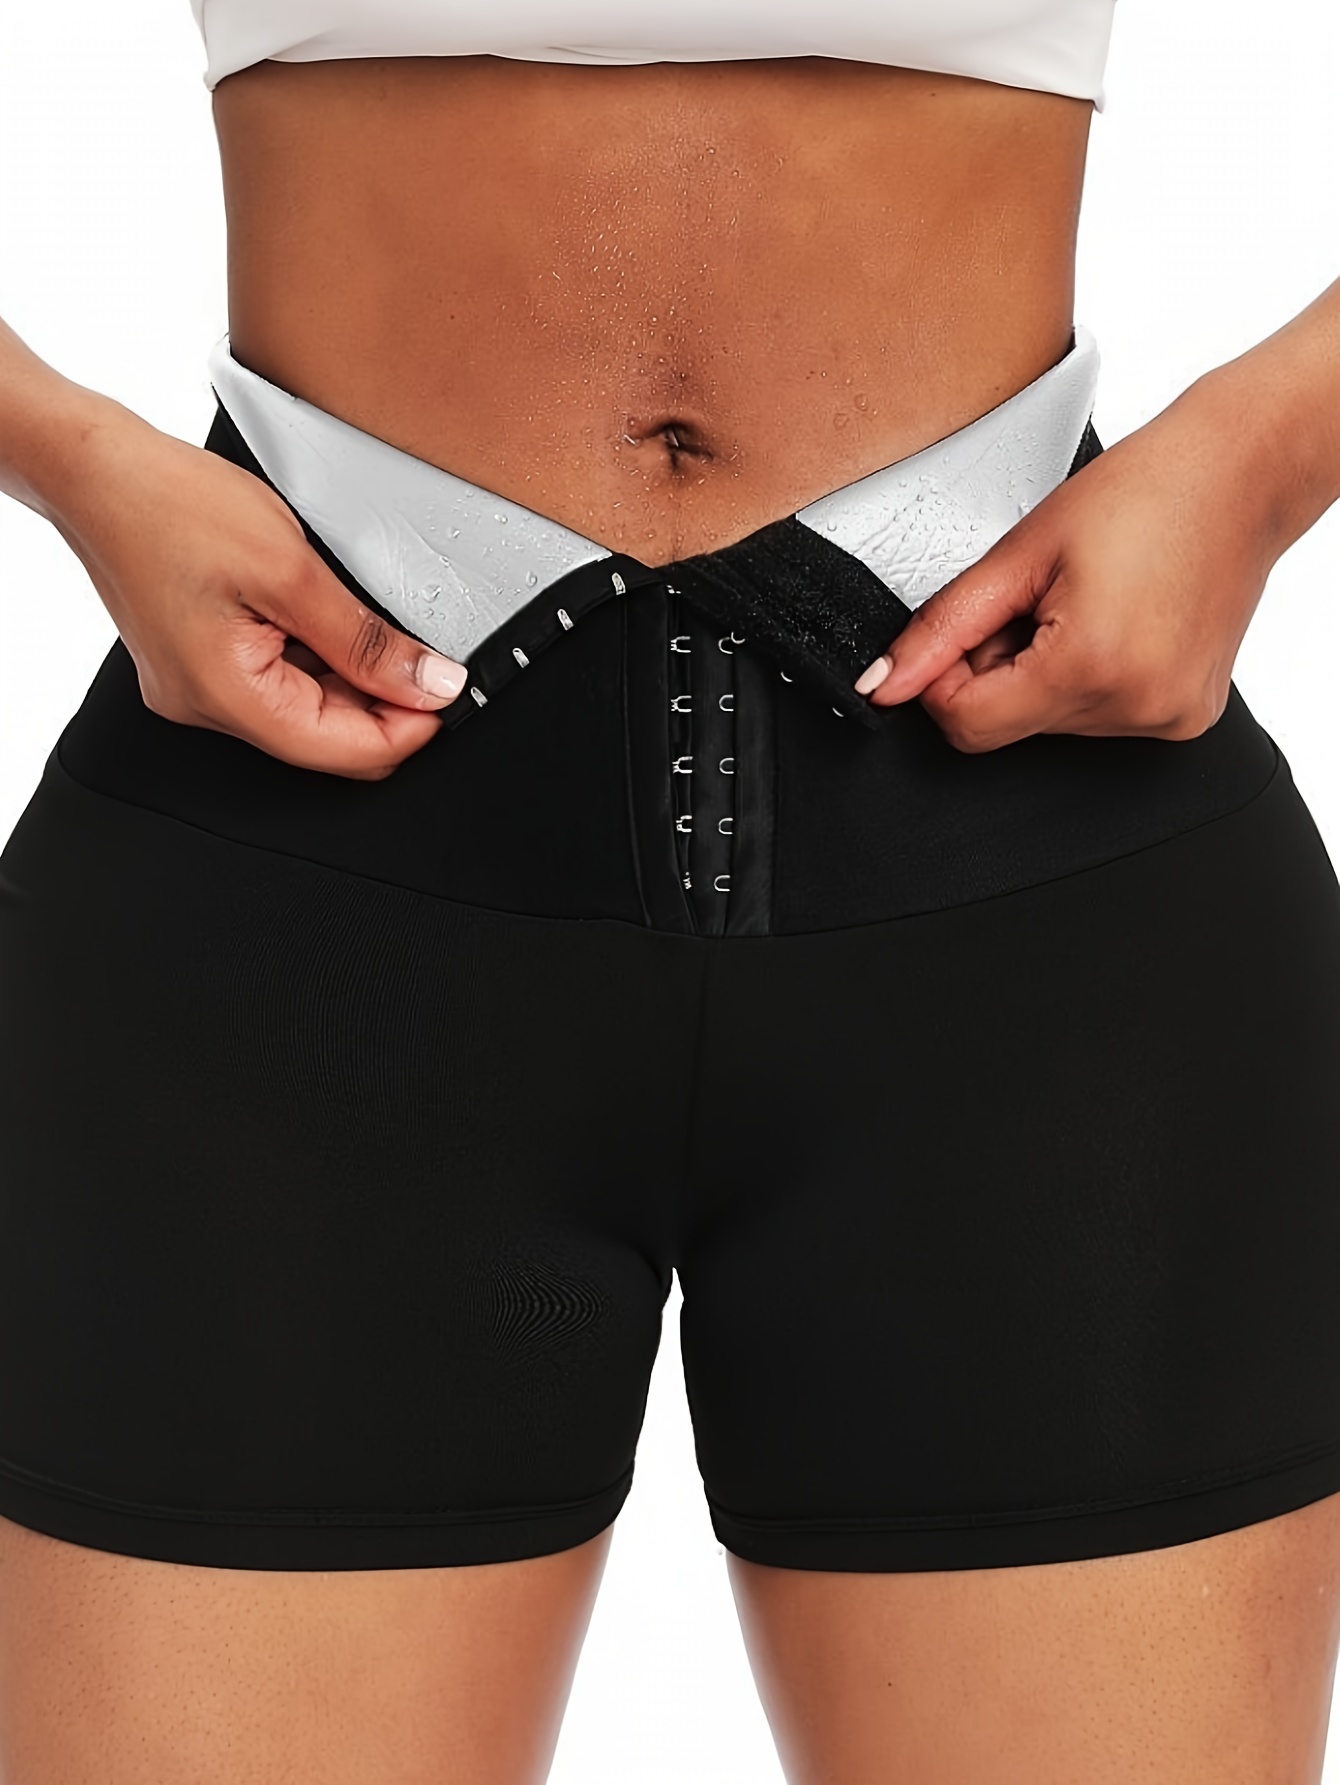 Sweat Sauna Pants Body Shaper Weight Loss Hook Waist Trainer